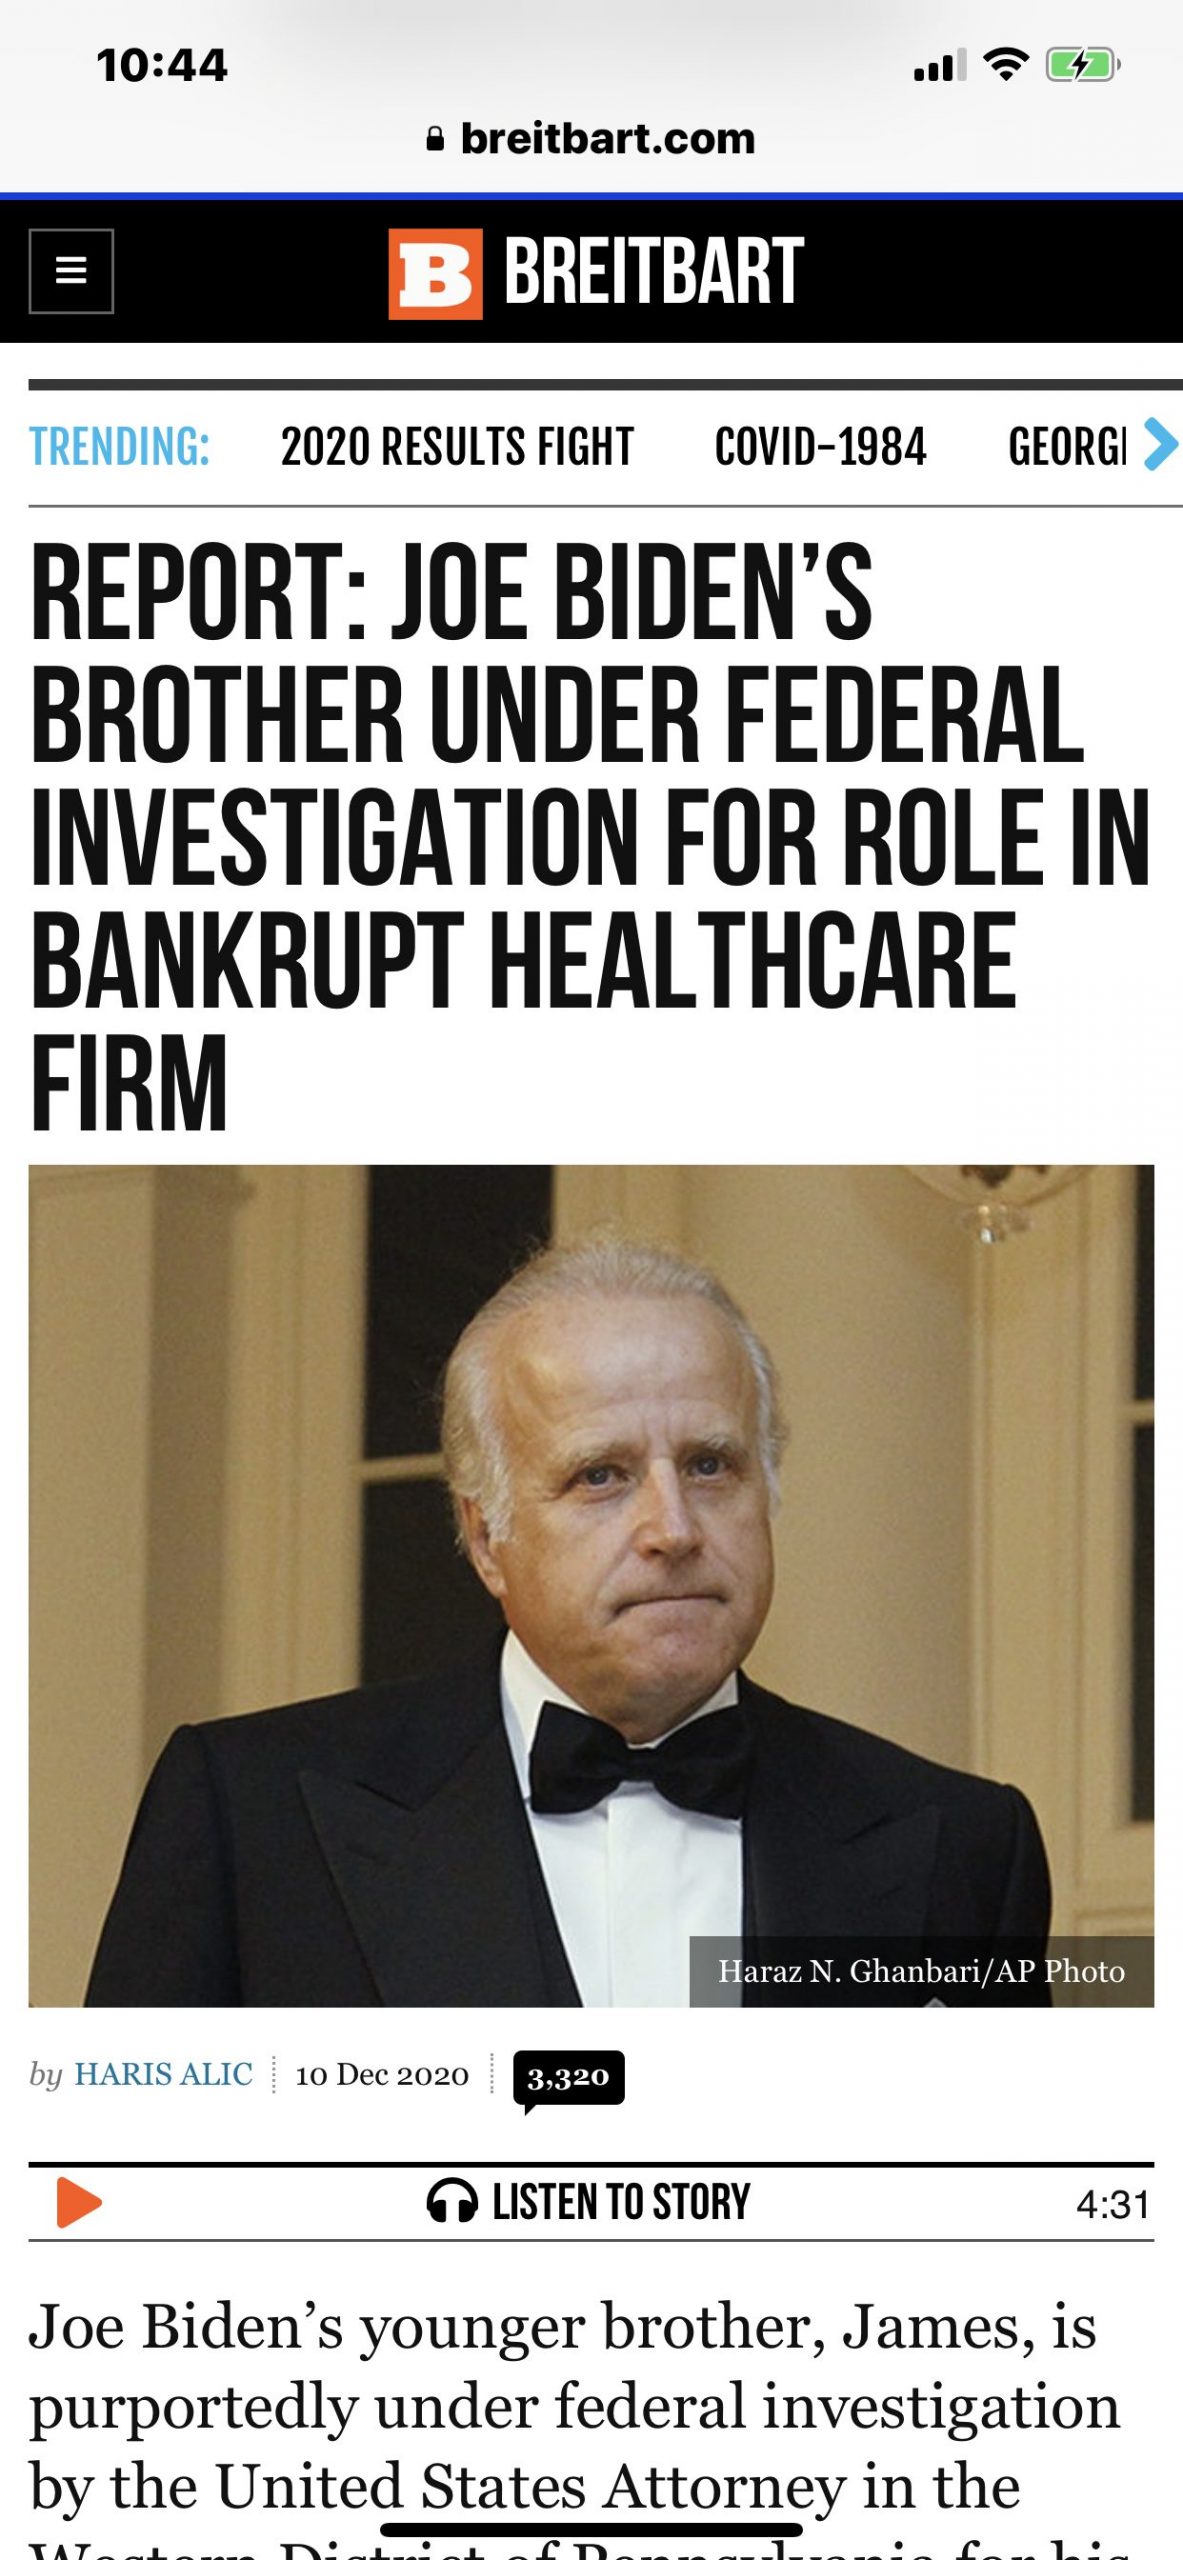 Joe Biden’s brother Jim Biden is under a Federal Investigation for Role in Bankrupt Healthcare